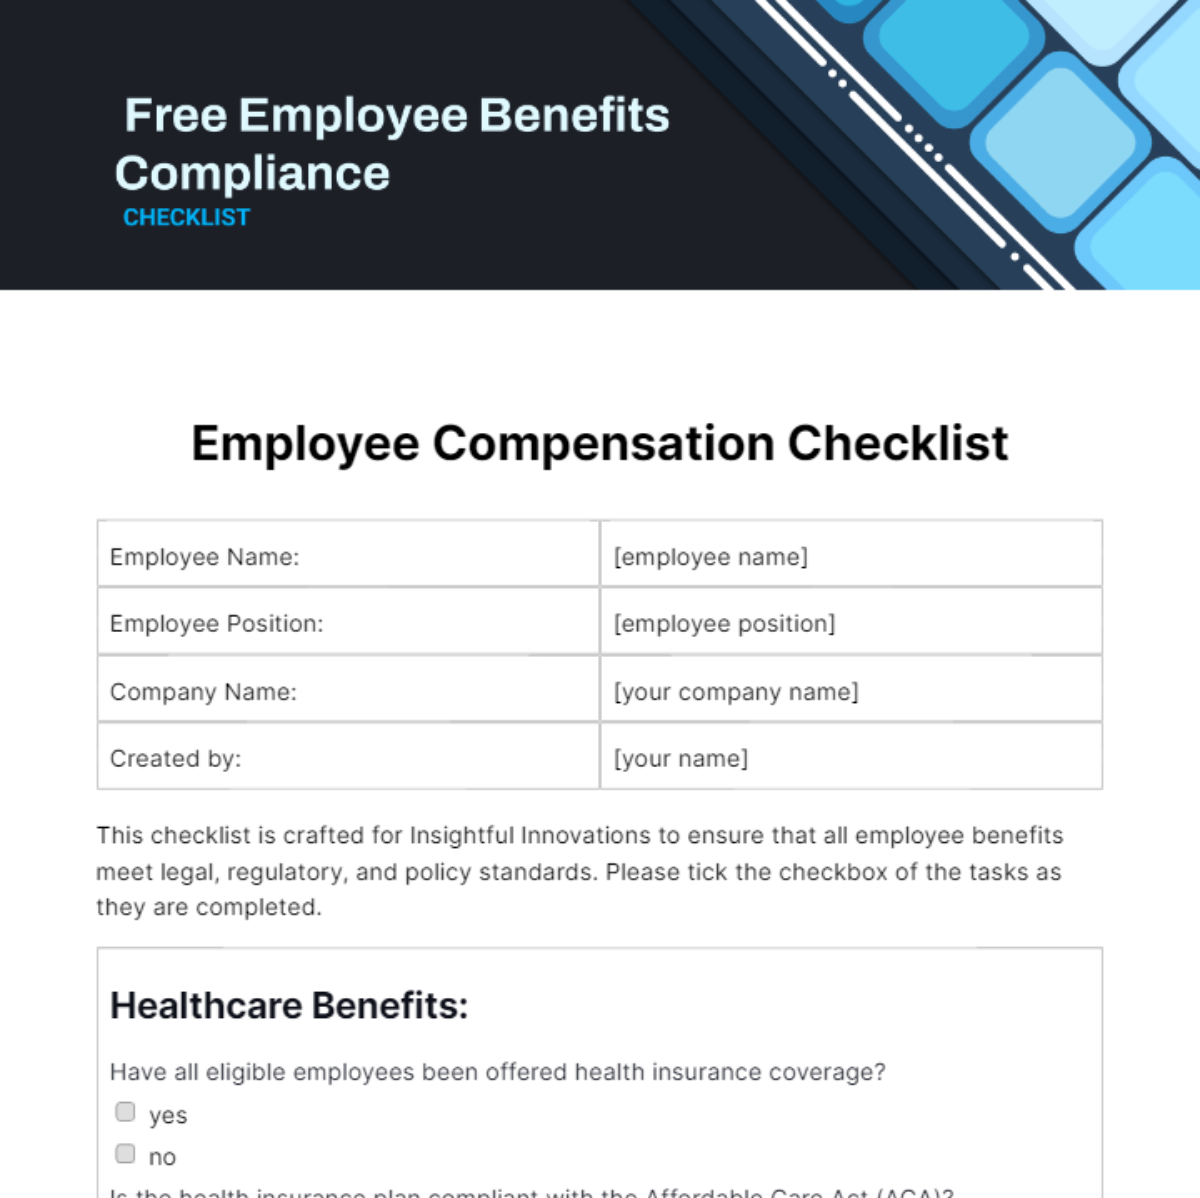 Free Employee Benefits Compliance Checklist Template